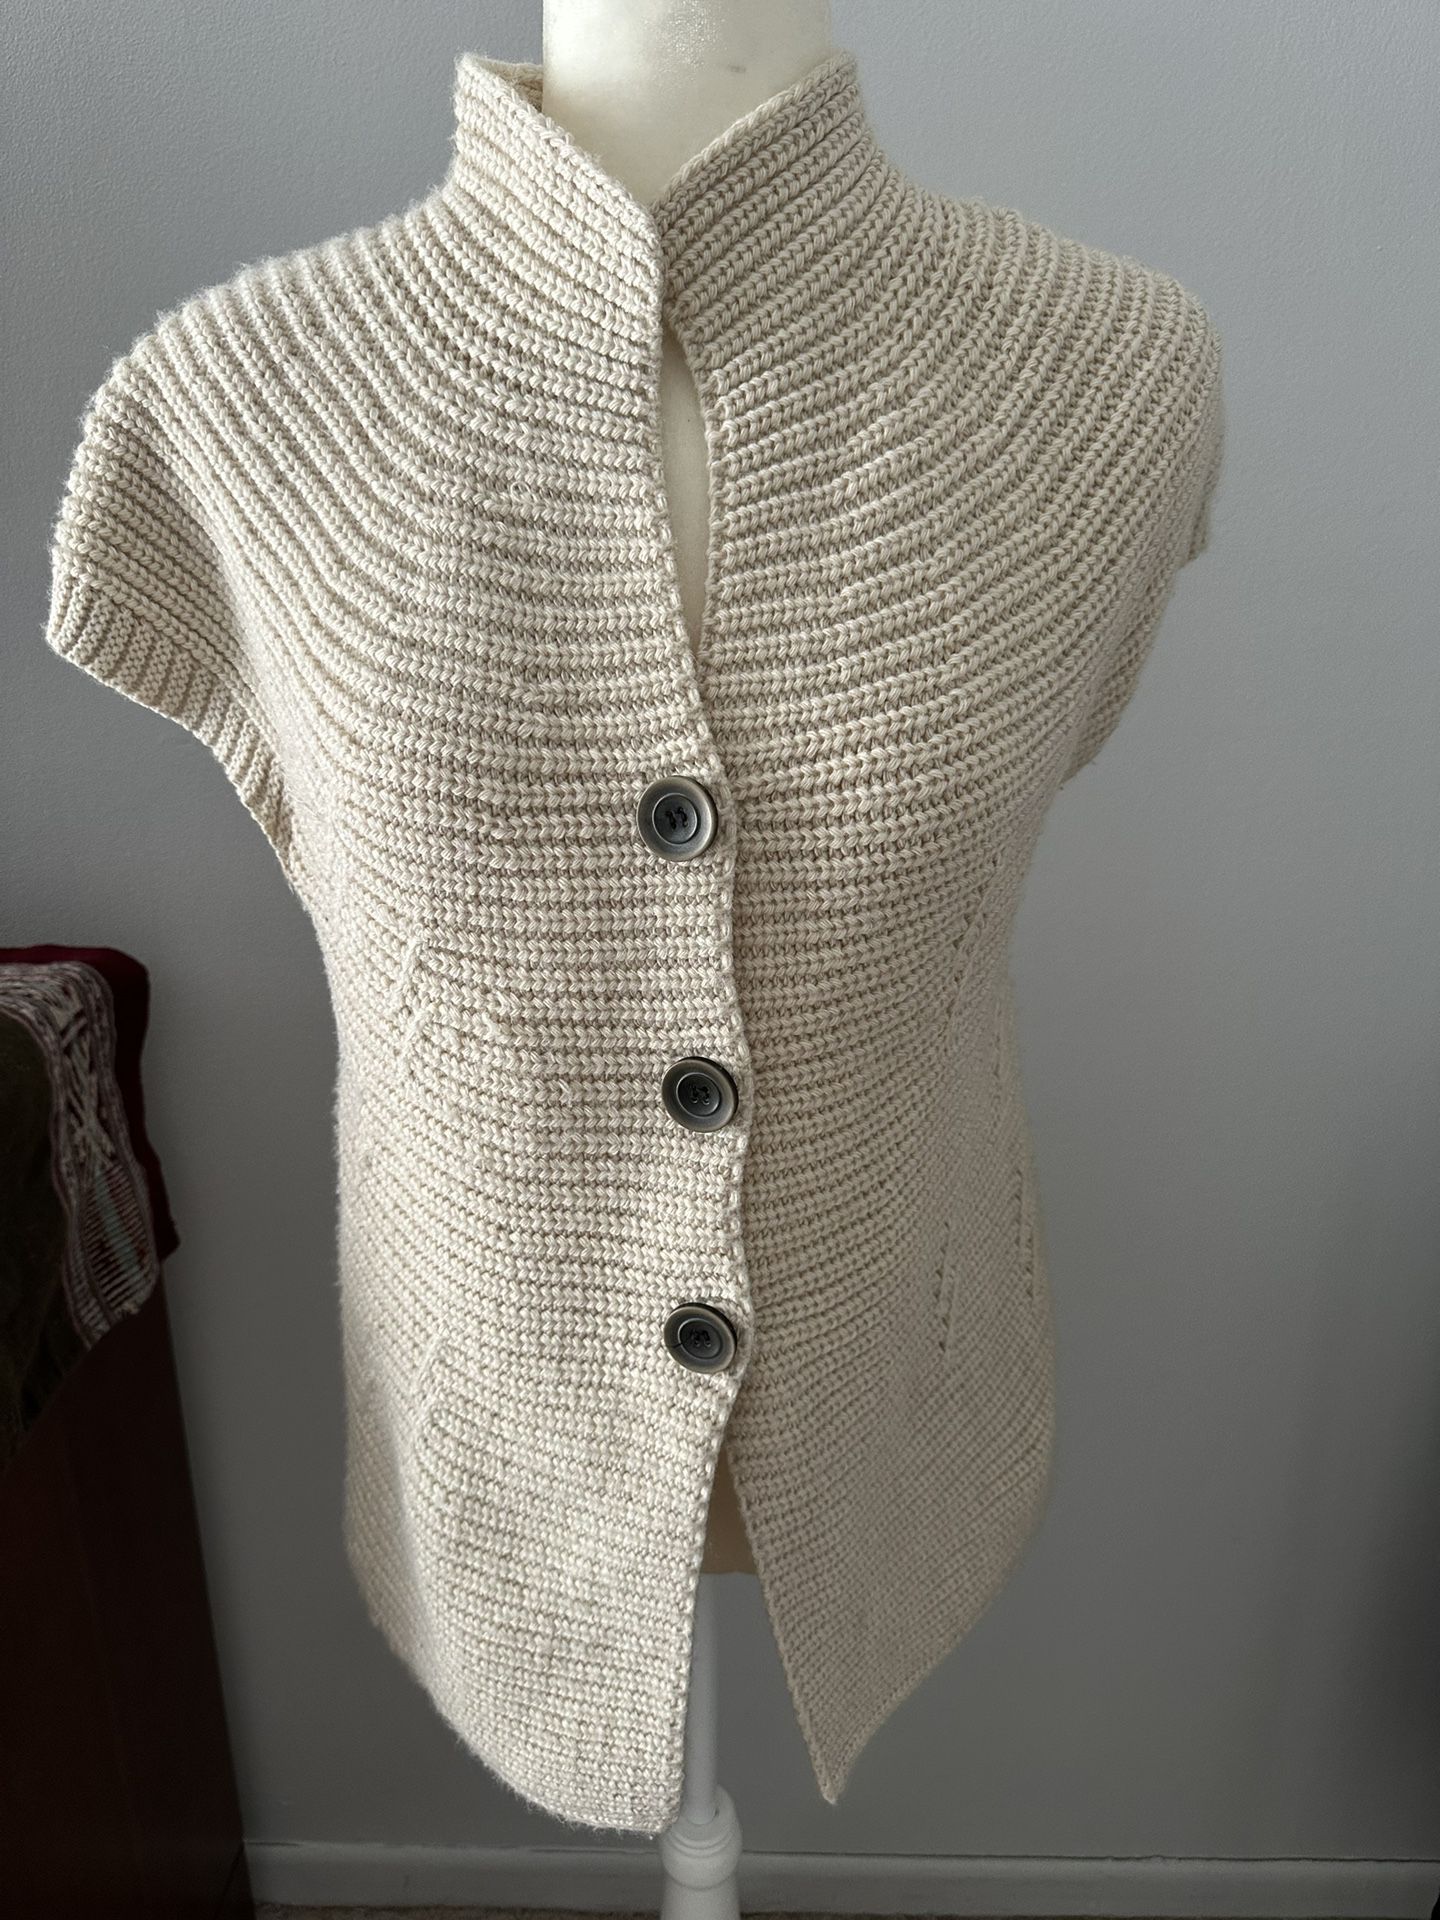 Unique Sweater Vest Top From Spain 